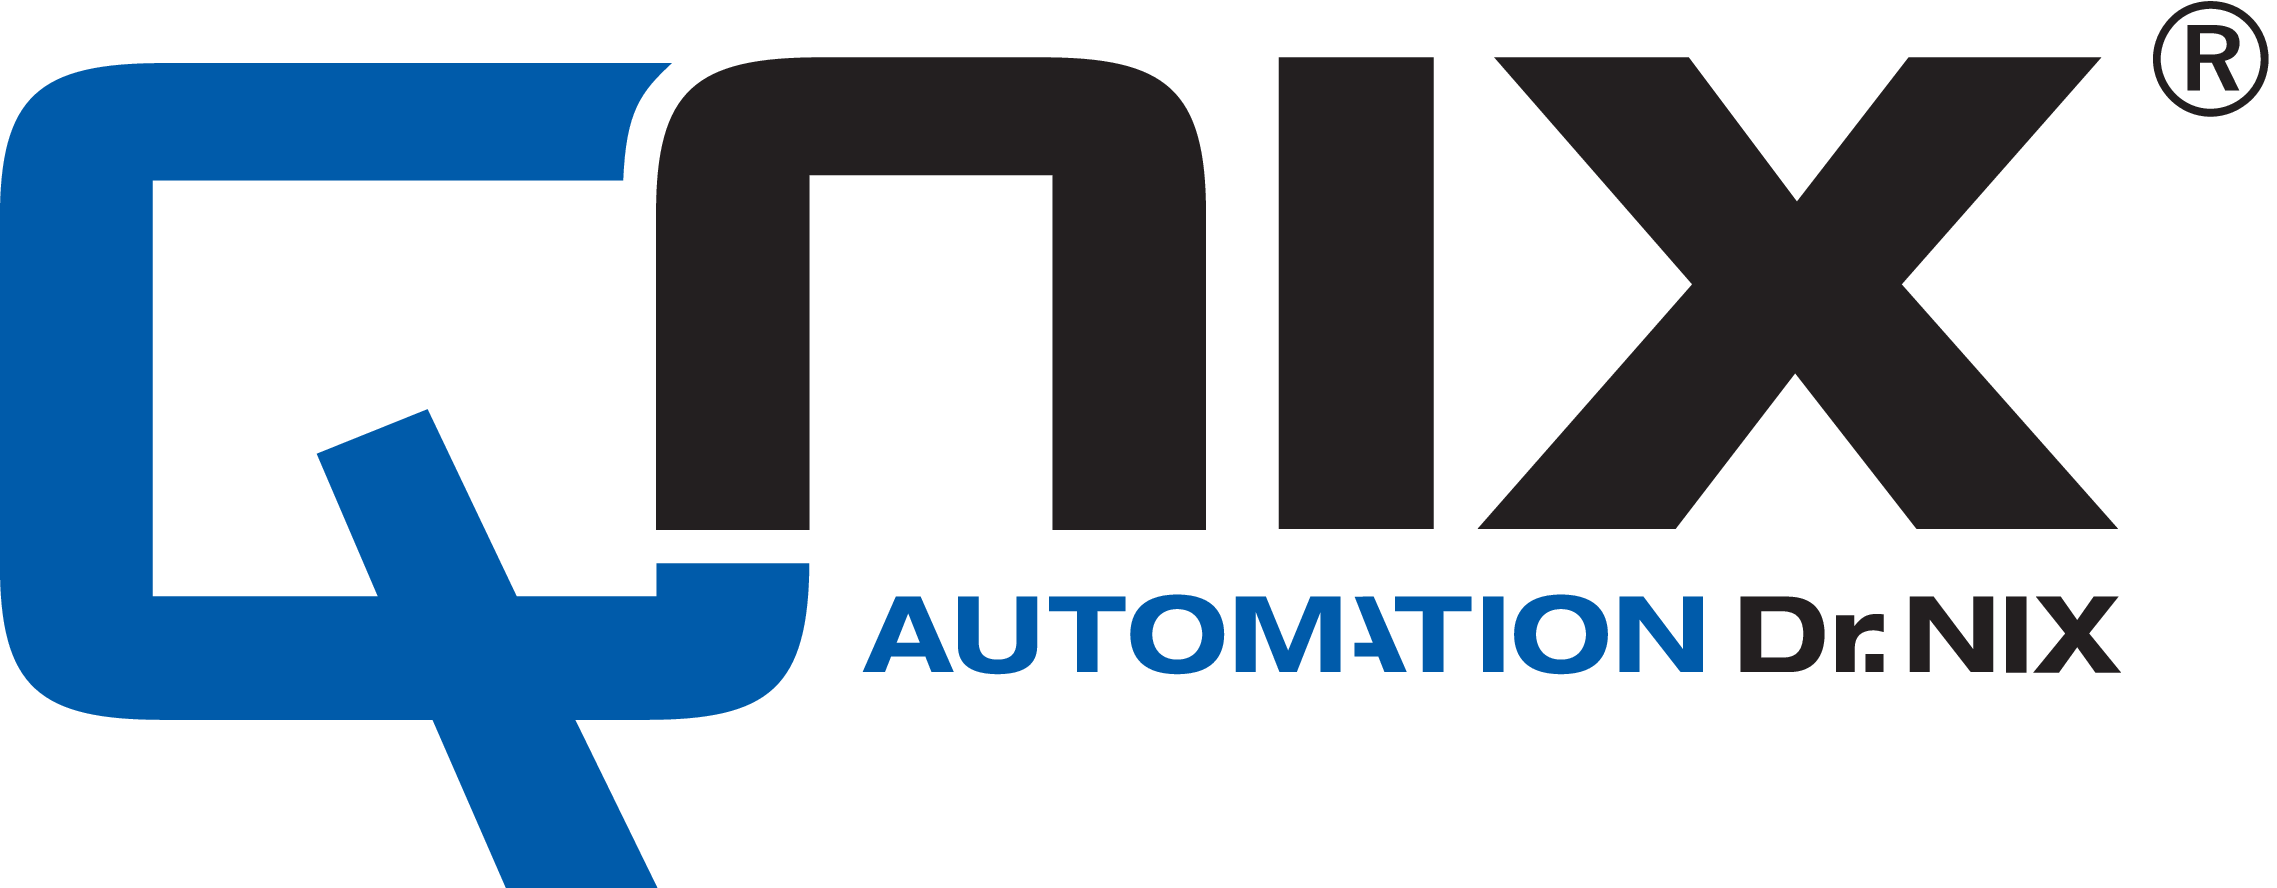 Automation Dr. Nix GmbH & Co. KG_logo